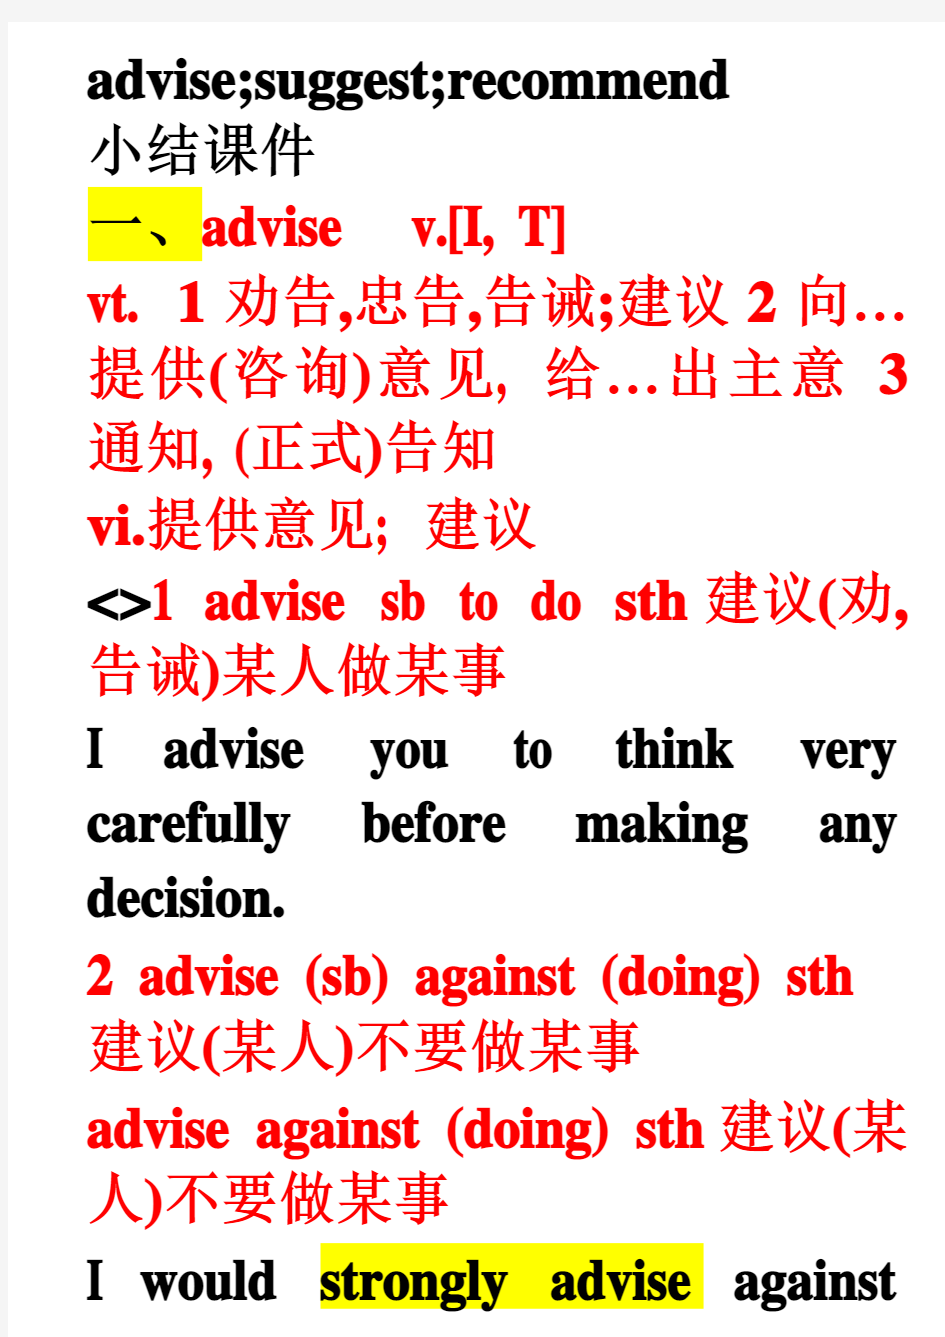 advise,suggest,recommend小结课件(word版)